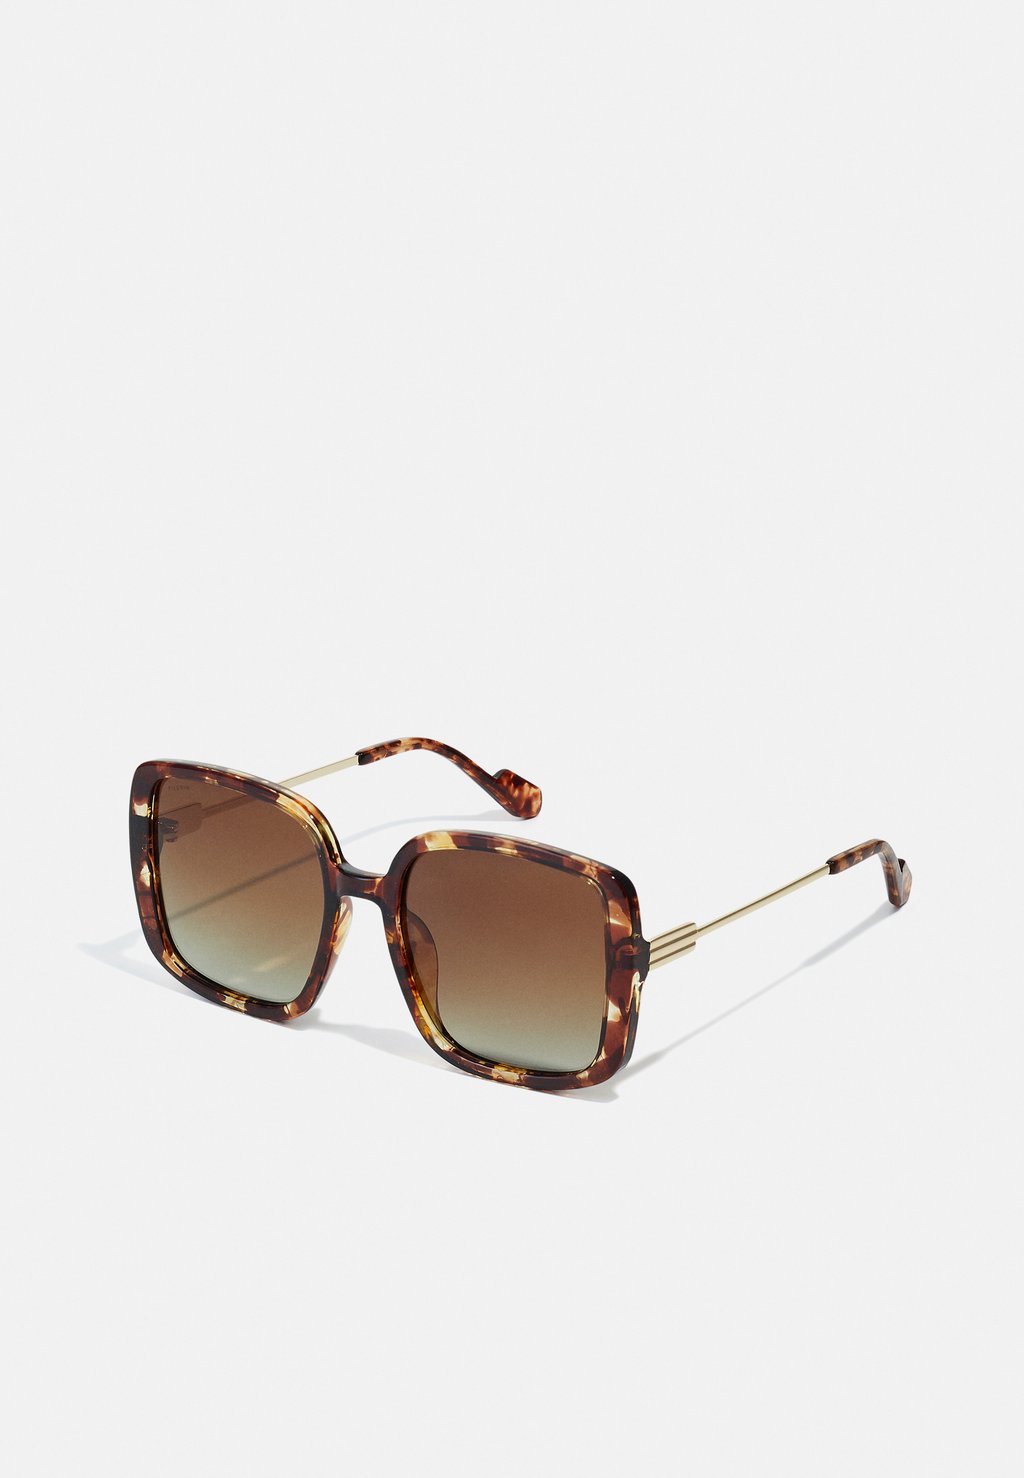 Солнцезащитные очки Aliet Sunglasses Tortoise Pilgrim, цвет brown/gold-coloured ost – jackie brown coloured vinyl lp